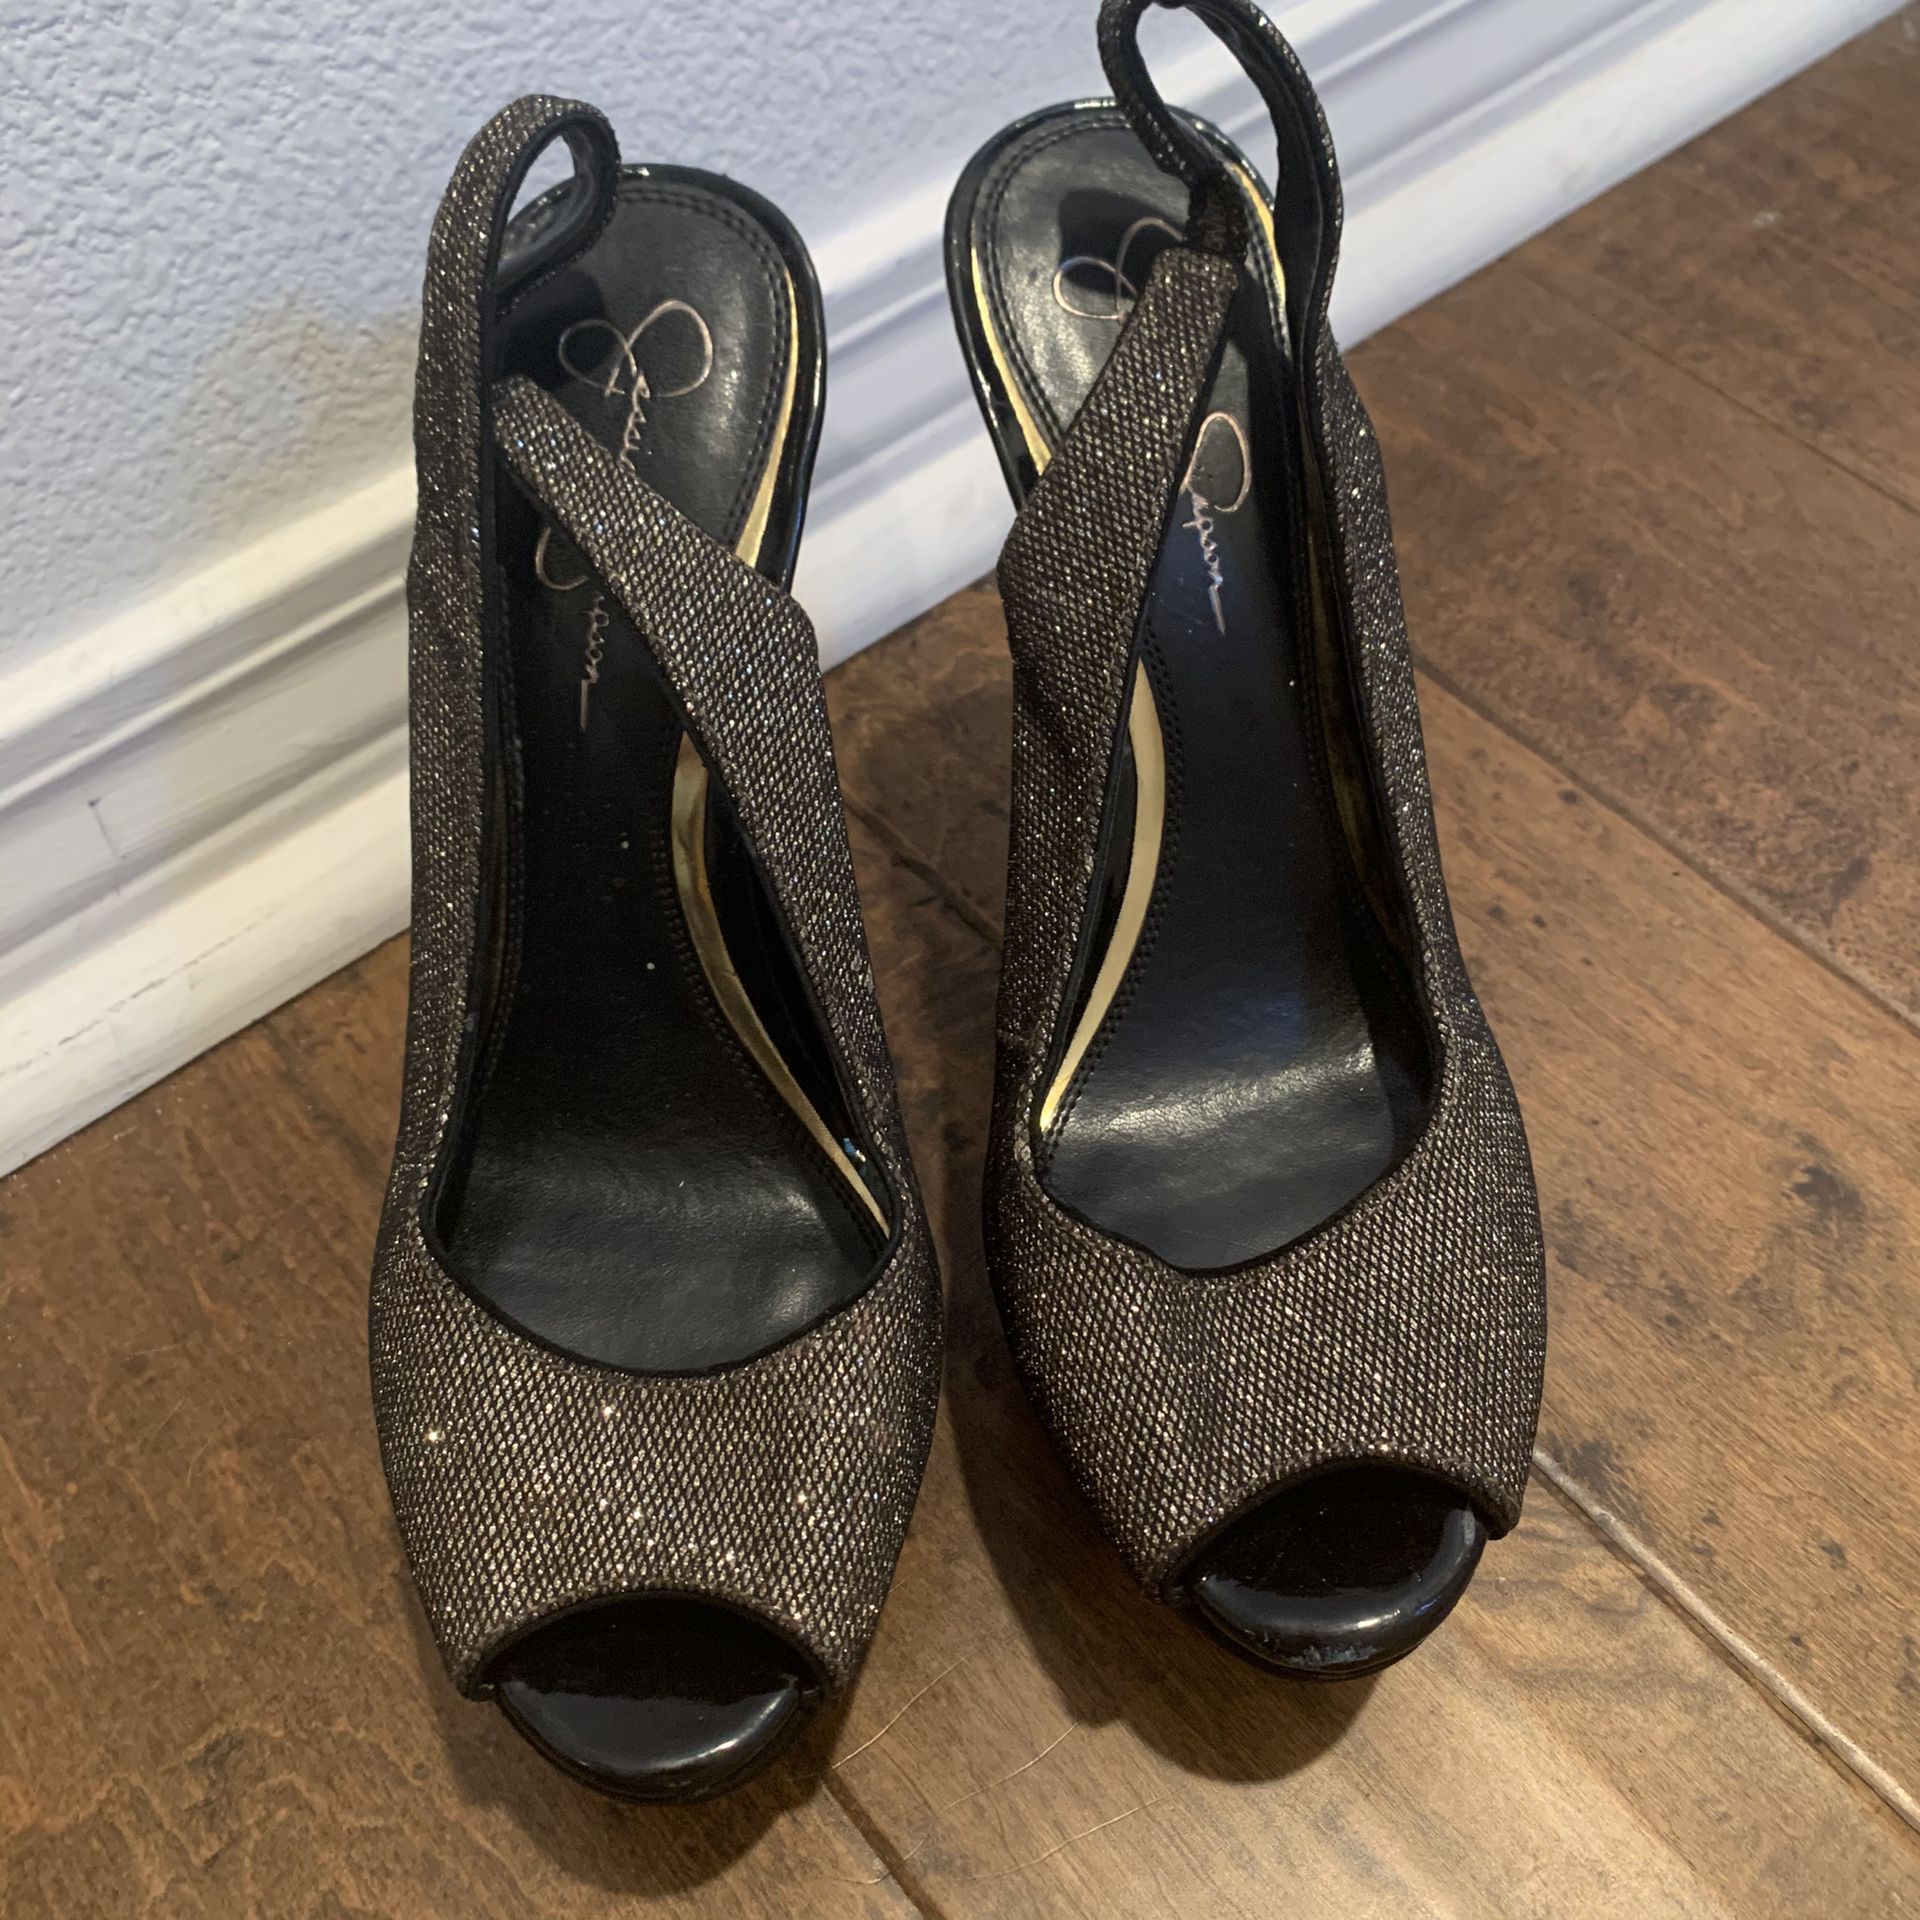 Jessica Simpson black/gold high heels